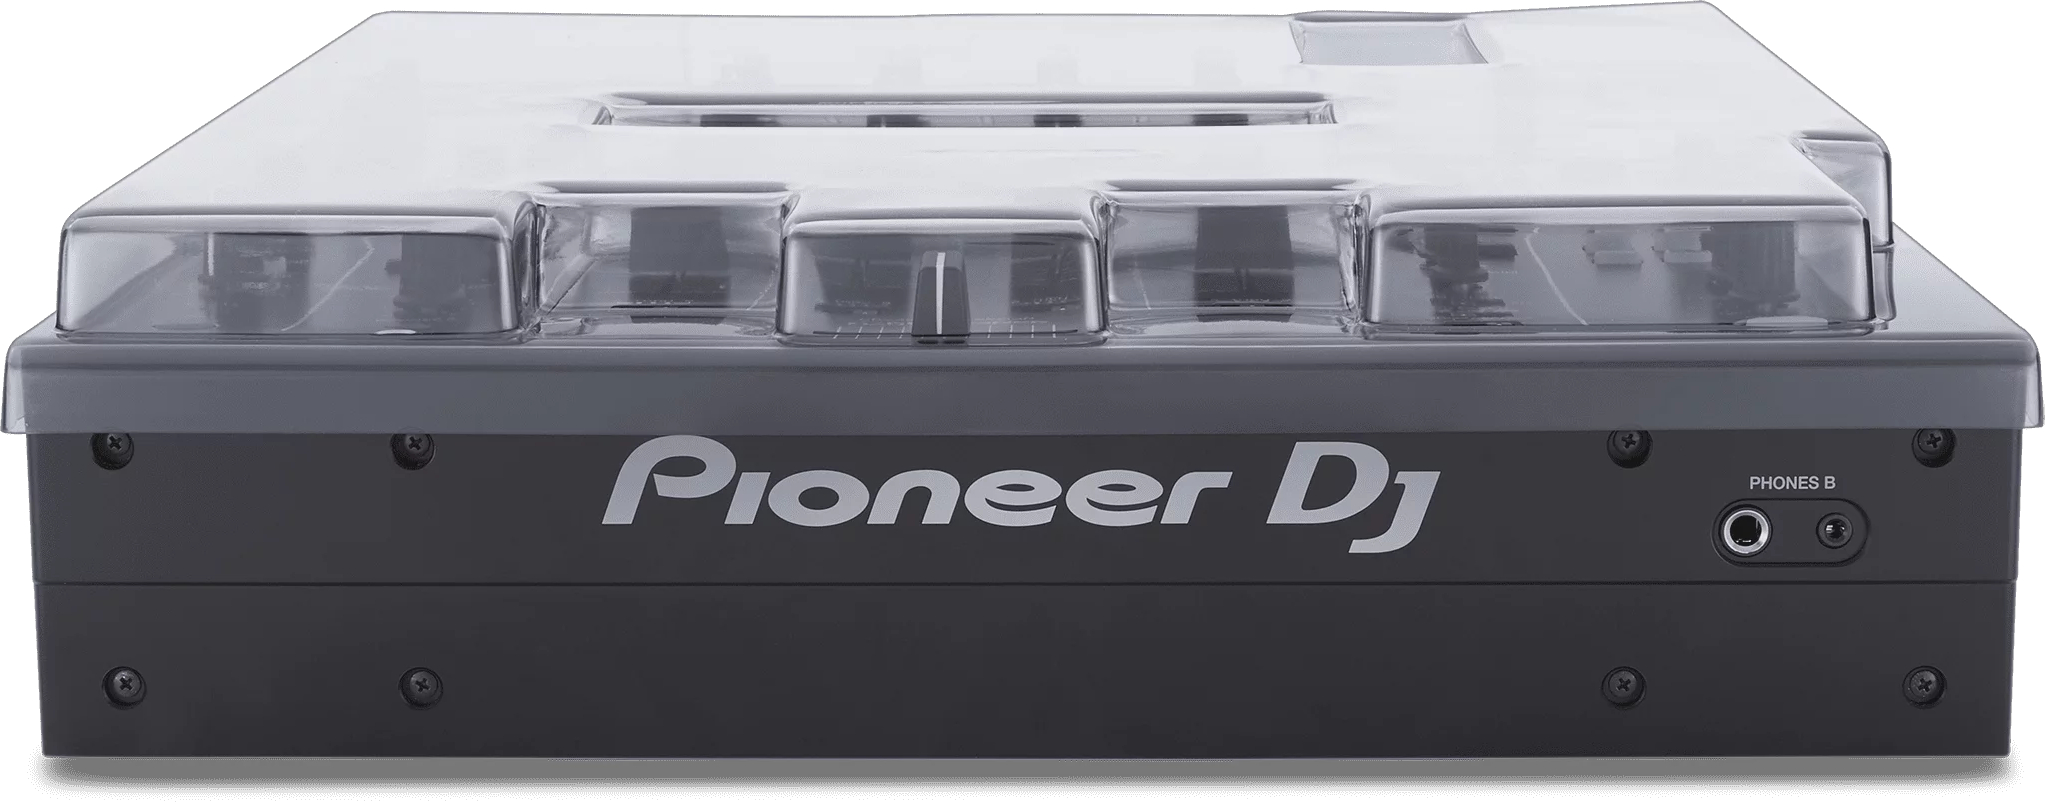 Decksaver Pioneer Dj Djm-a9 Cover - DJ Gigbag - Variation 2